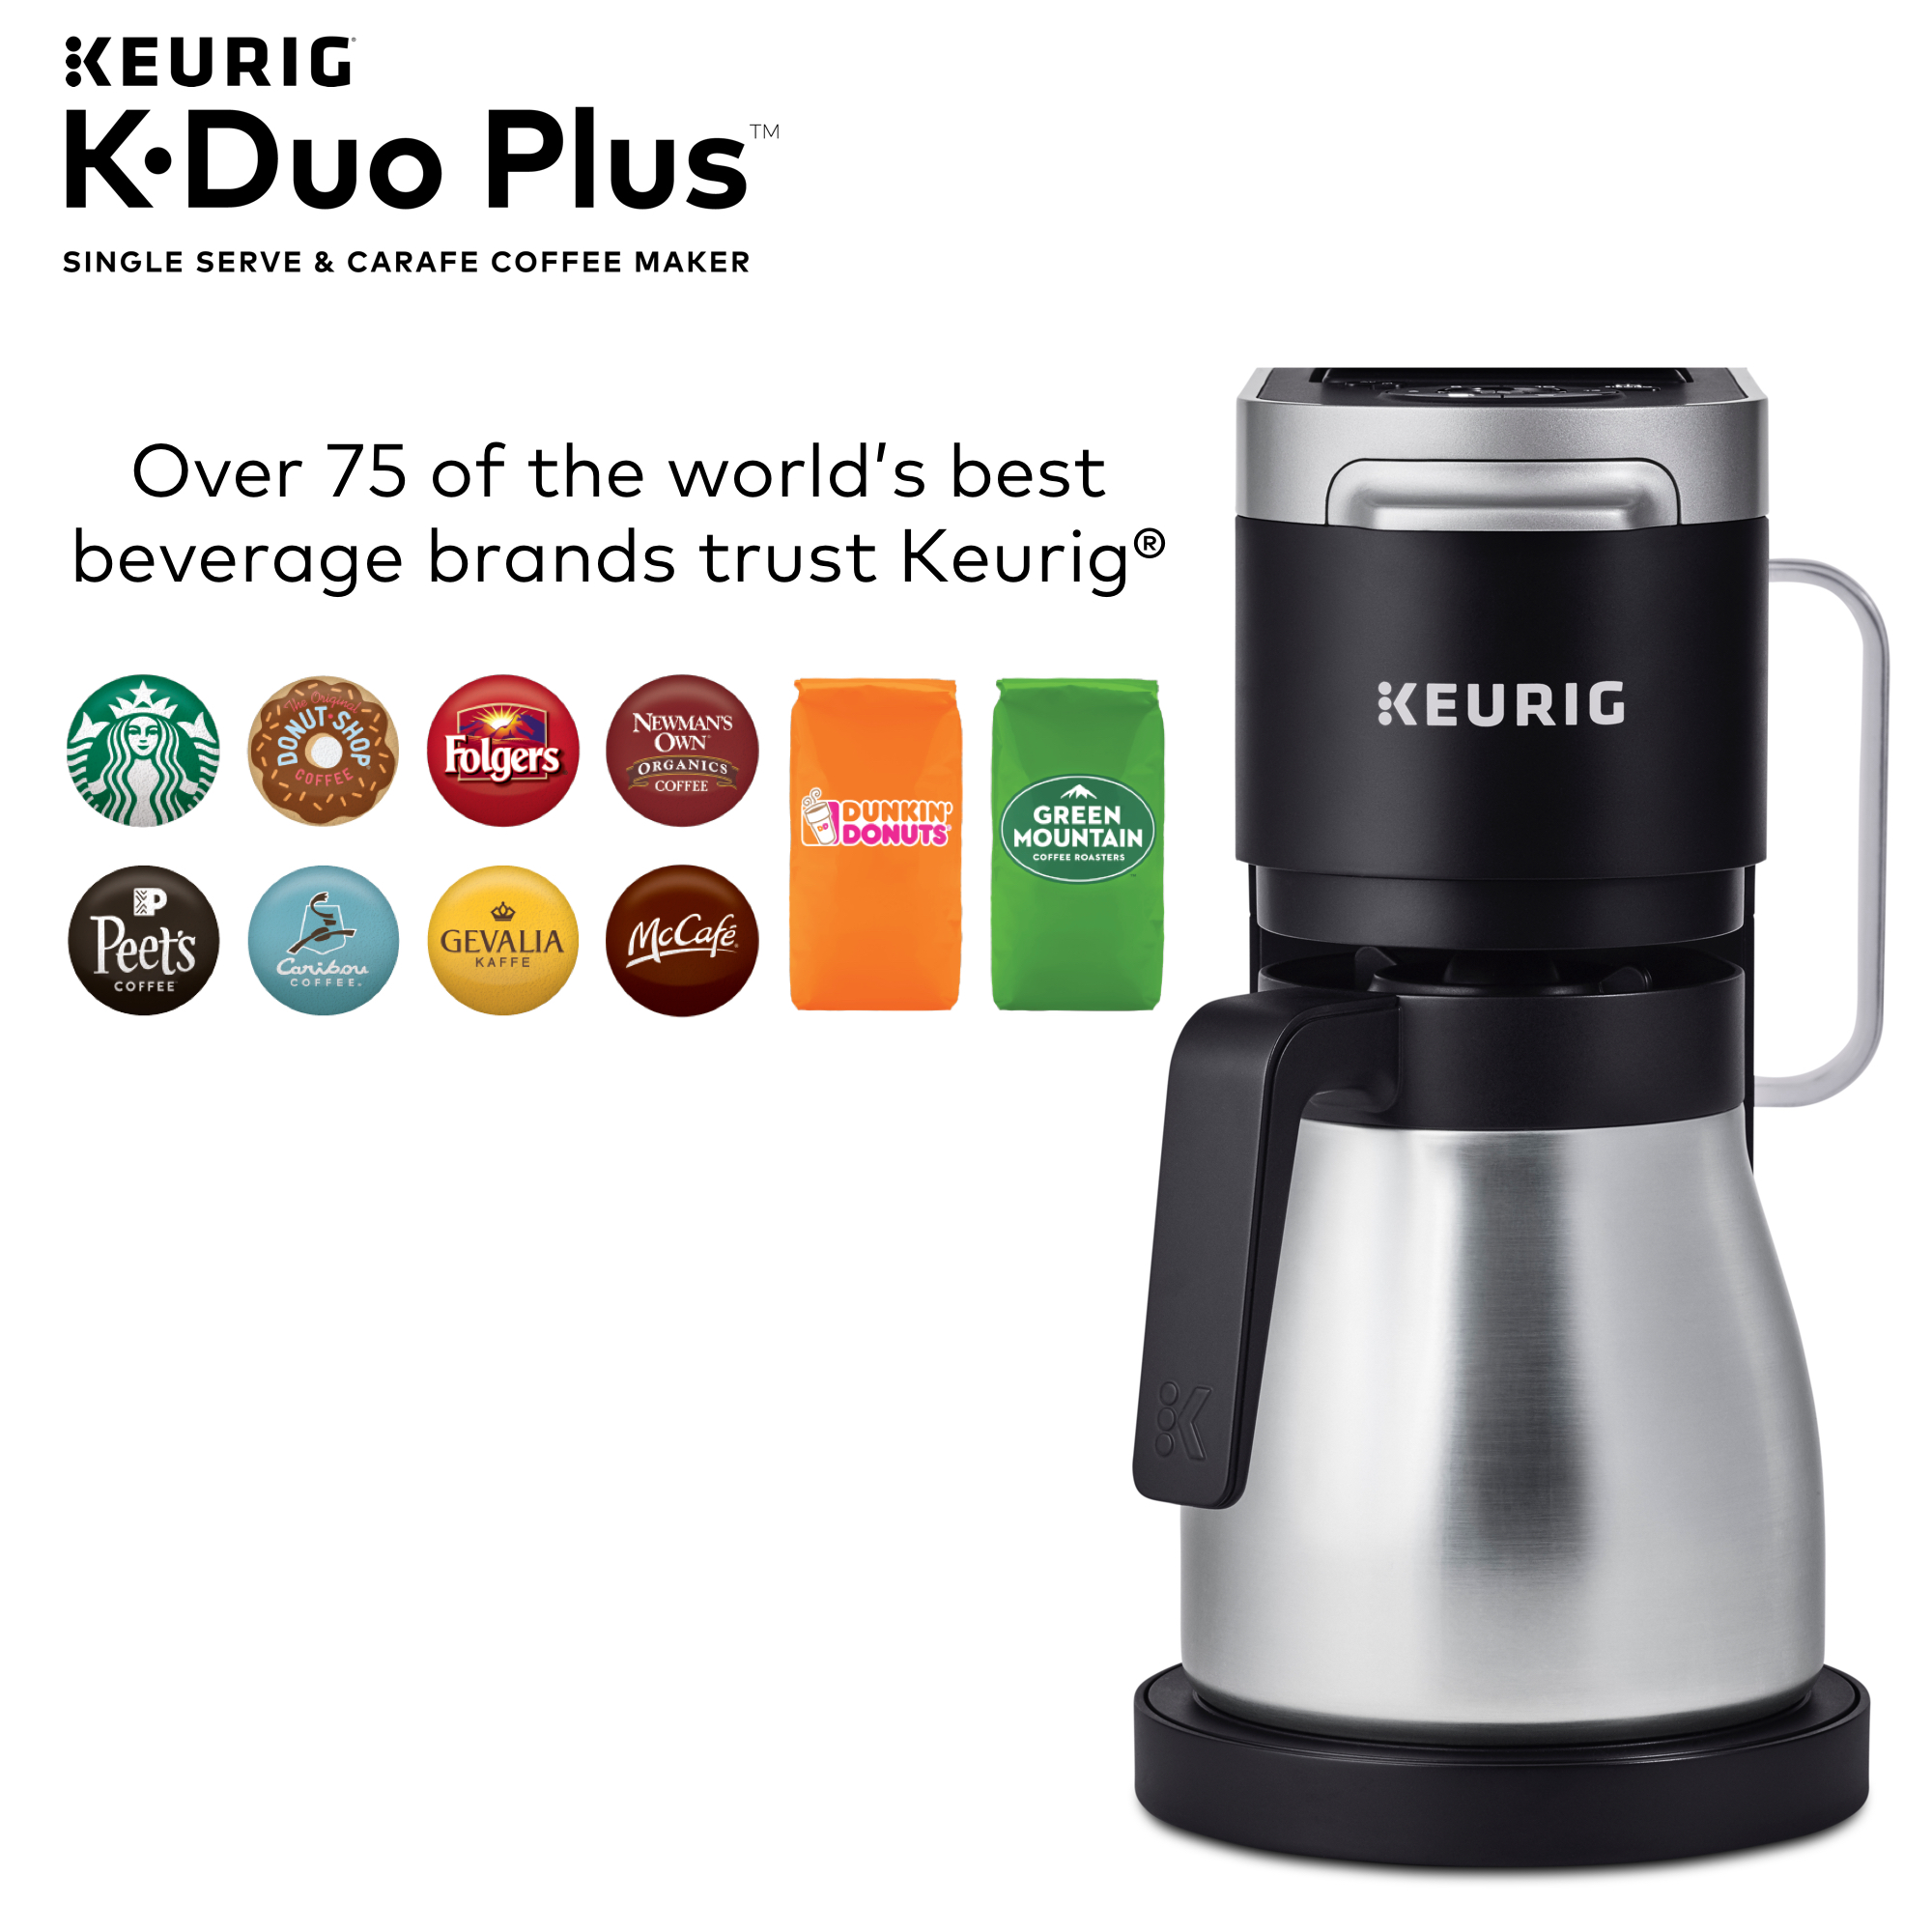 Keurig K-Duo Plus Single Serve & Carafe Coffee Maker - image 6 of 25